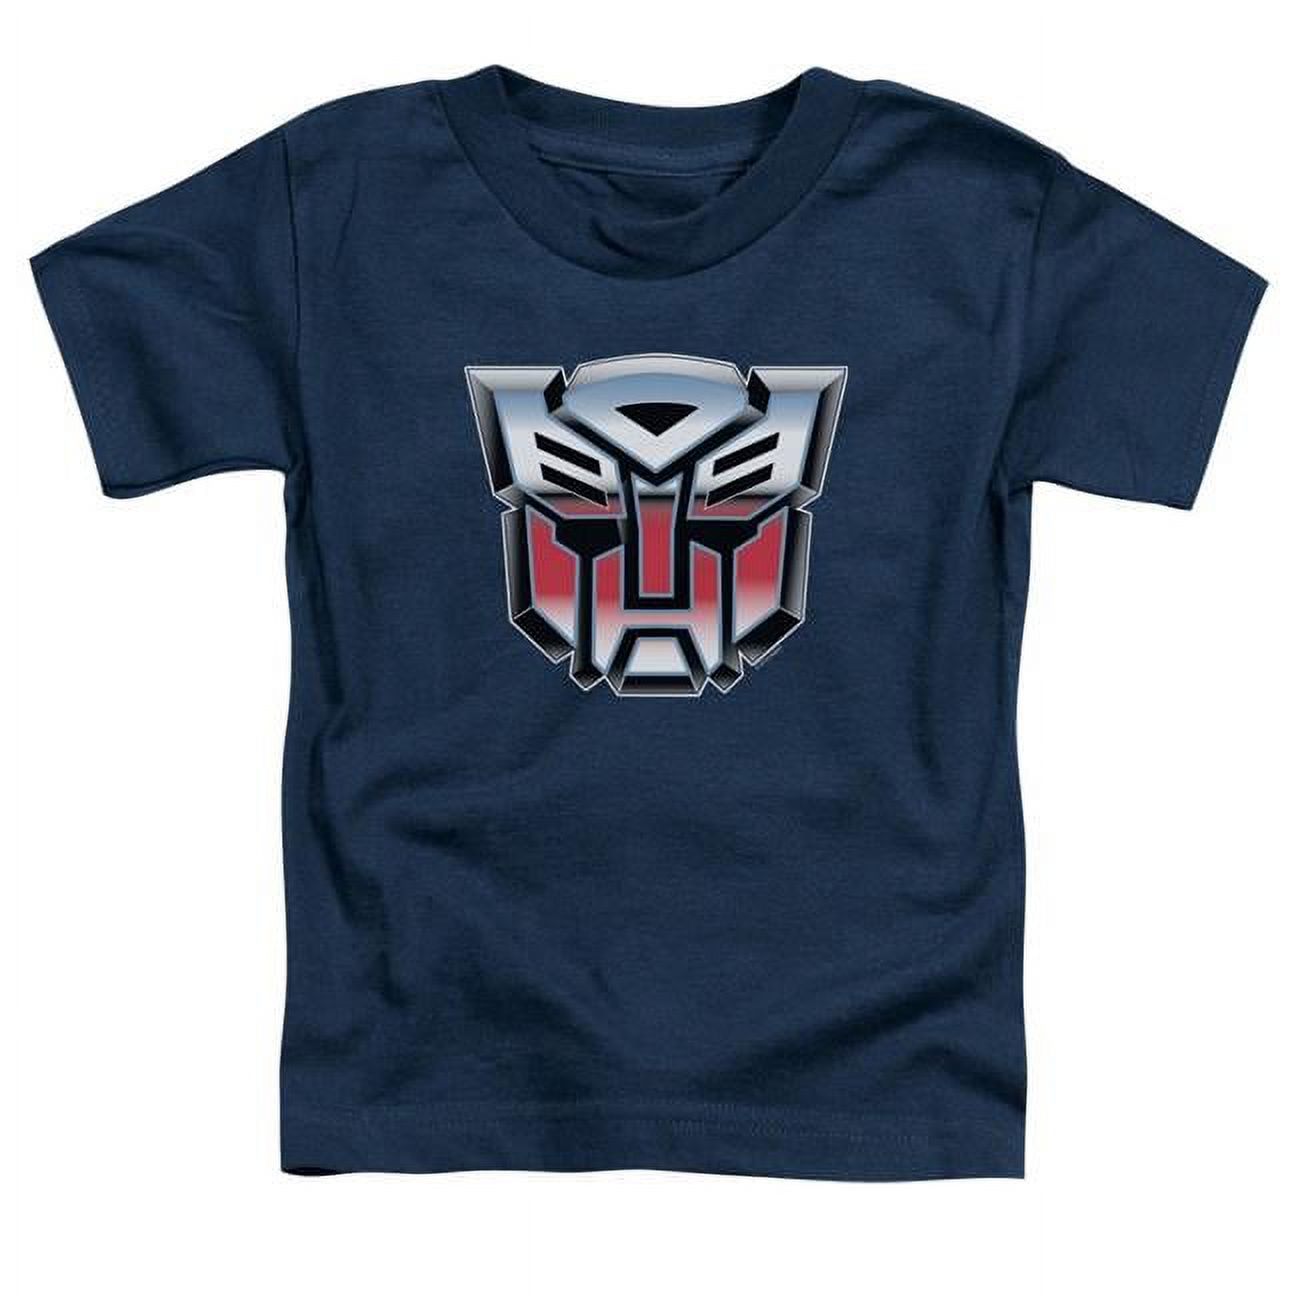 Trevco  Transformers & Autobot Airbrush Logo Print Toddler Short Sleeve T-Shirt - Navy - Medium 3T - image 1 of 1